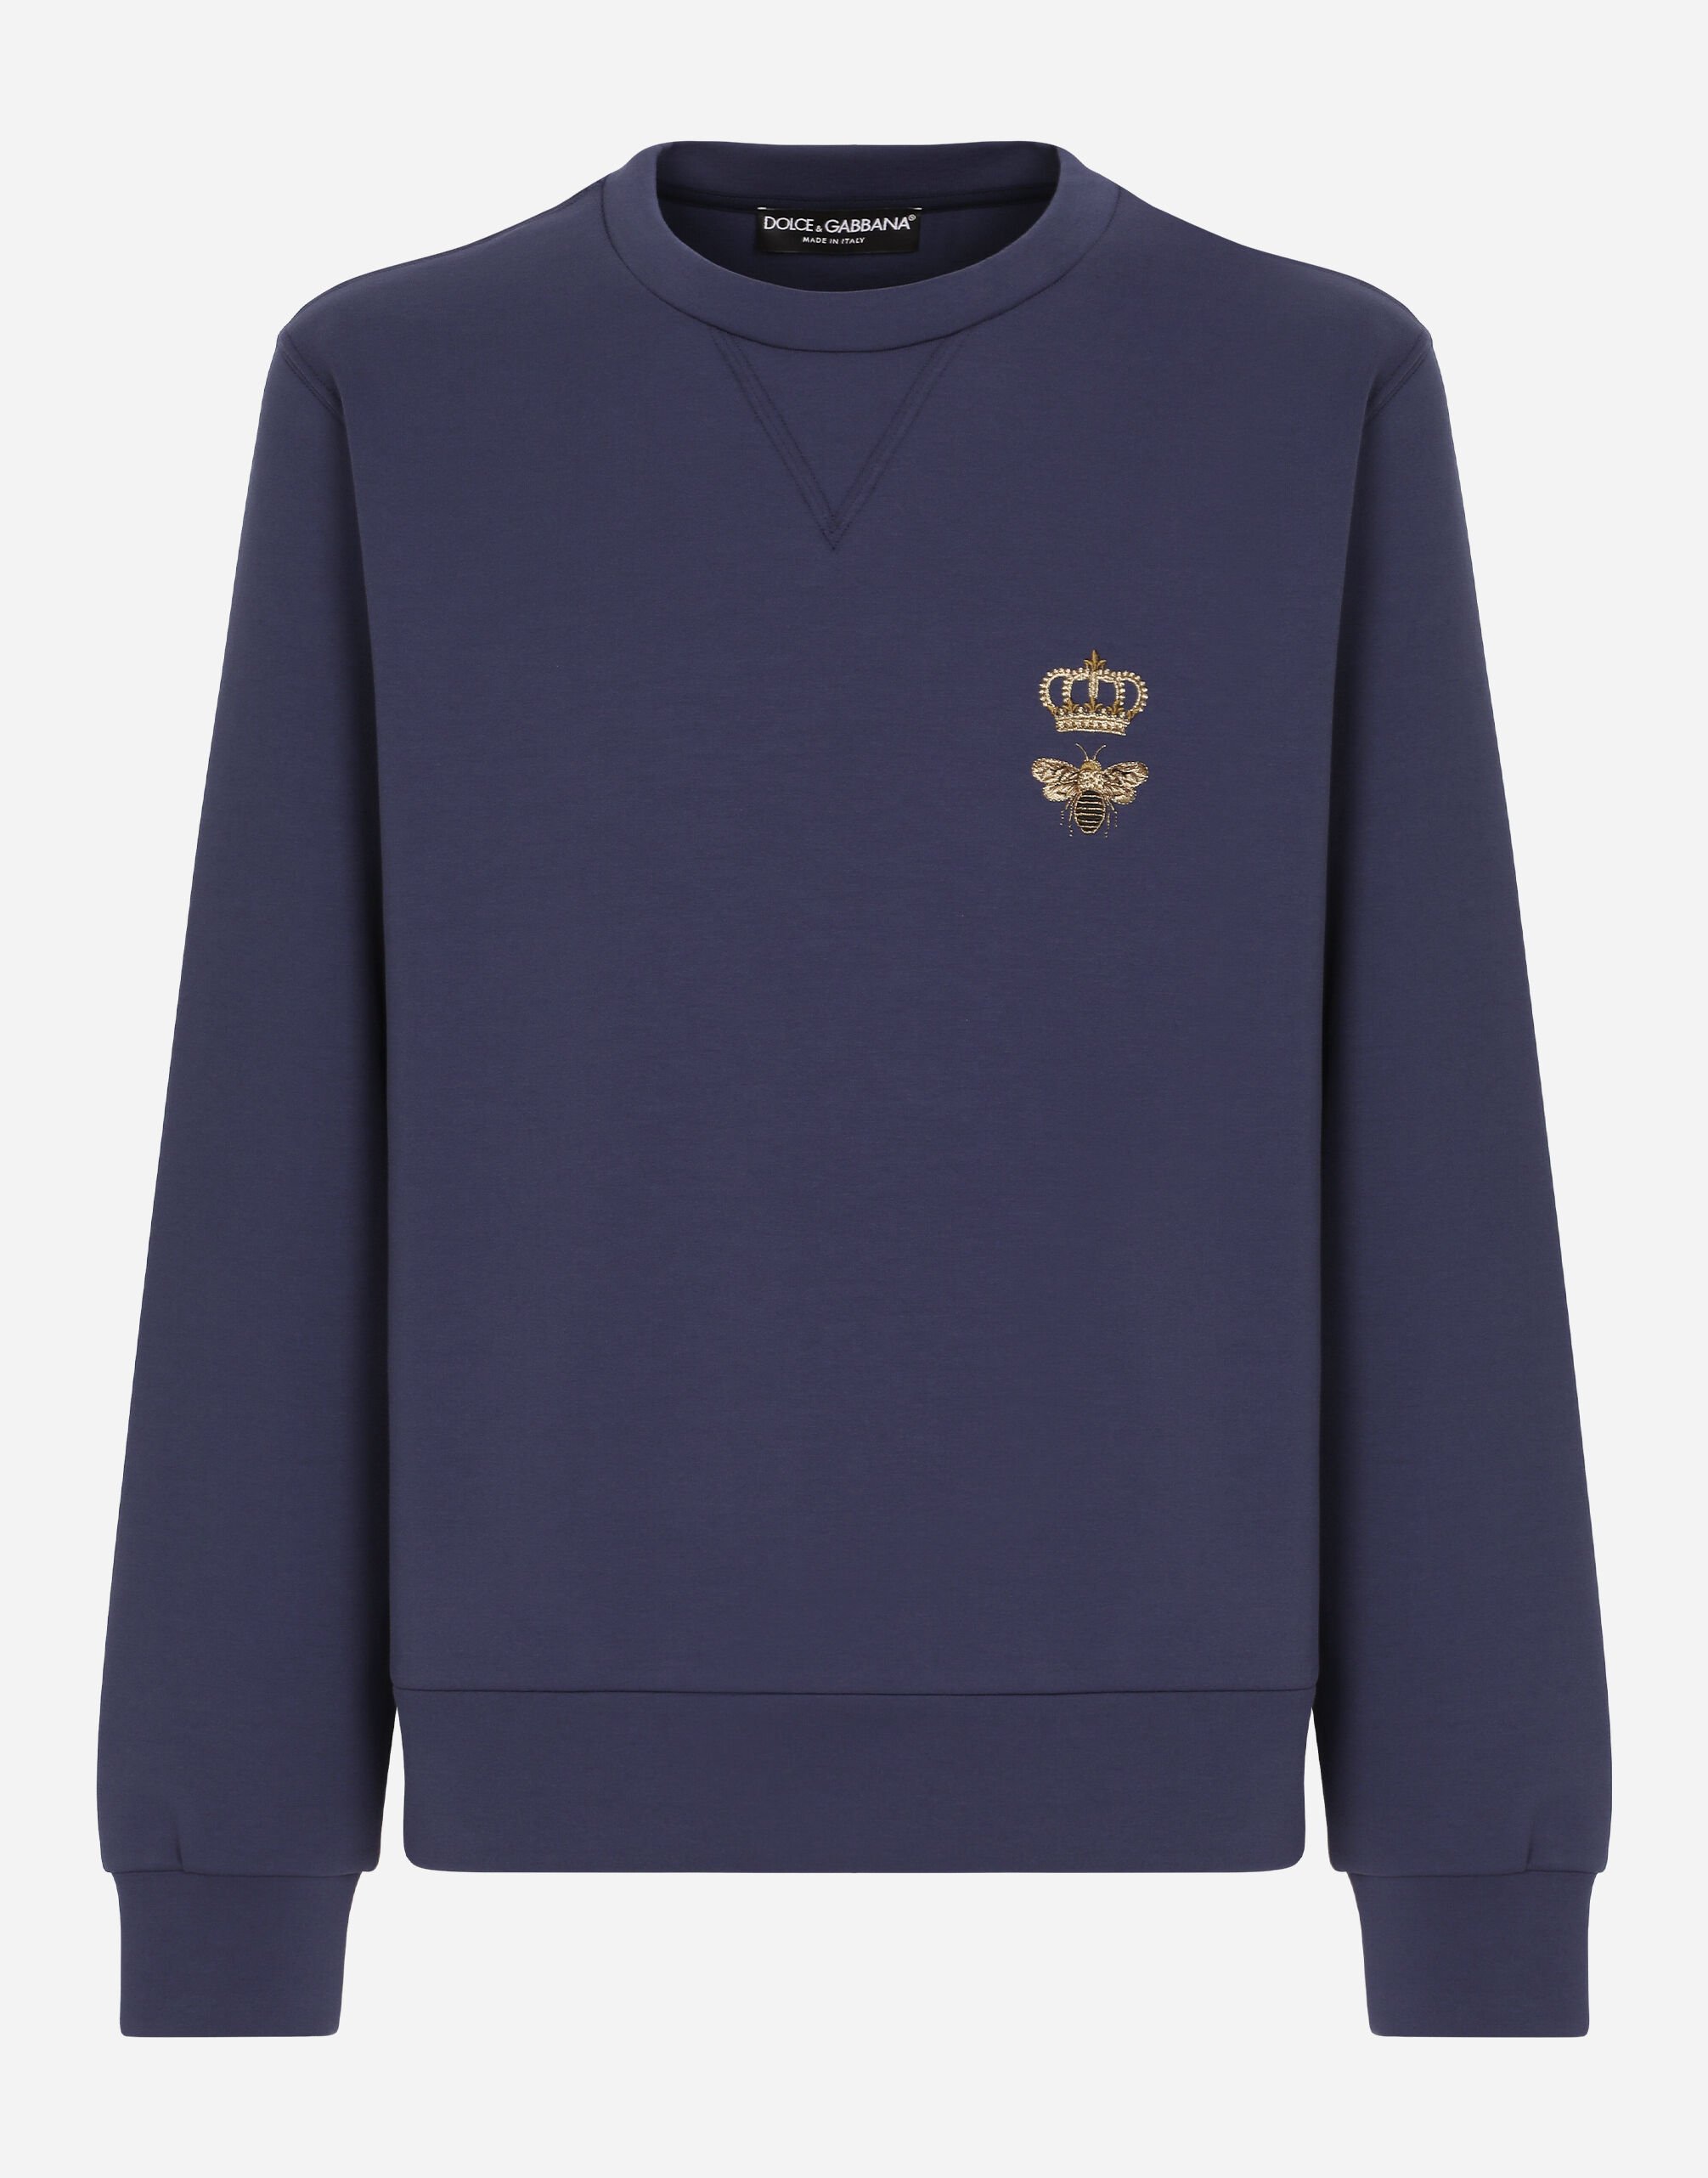 Dolce & Gabbana Cotton jersey sweatshirt with embroidery Print G9AQVTHI7X6